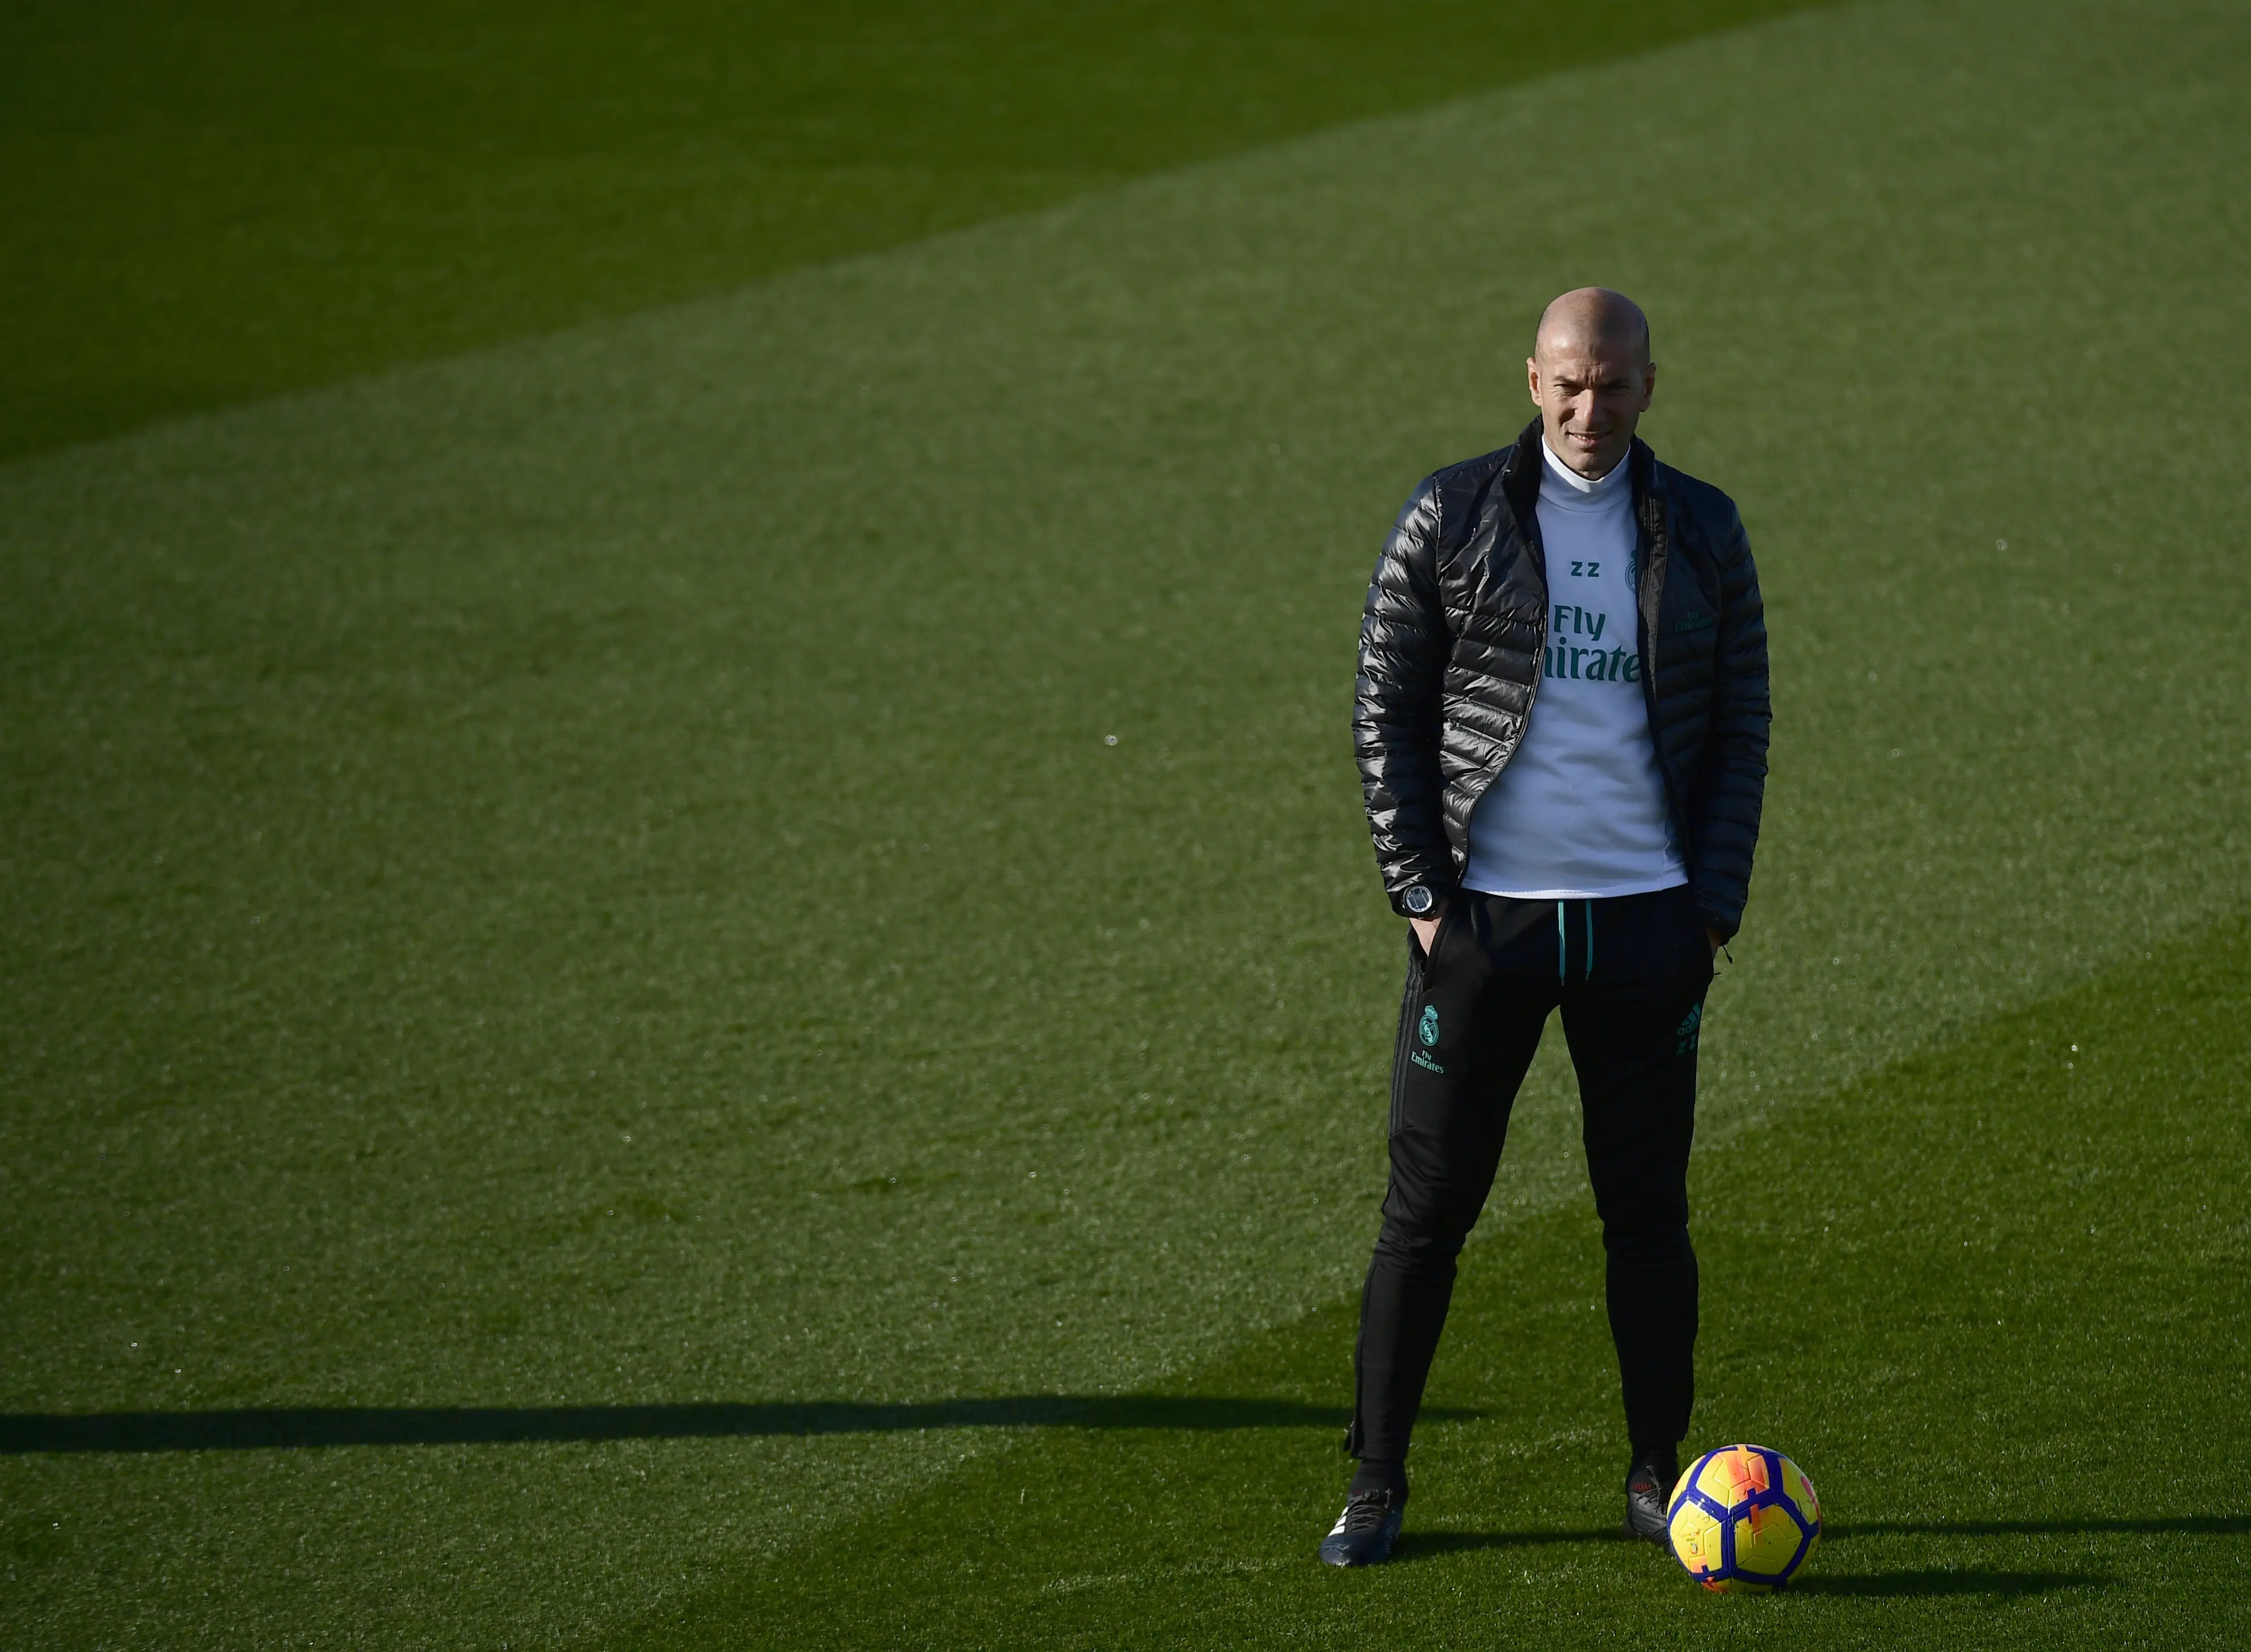 Pelatih Real Madrid, Zinedine Zidane berkomentar soal pertarungan Barcelona. (PIERRE-PHILIPPE MARCOU / AFP)